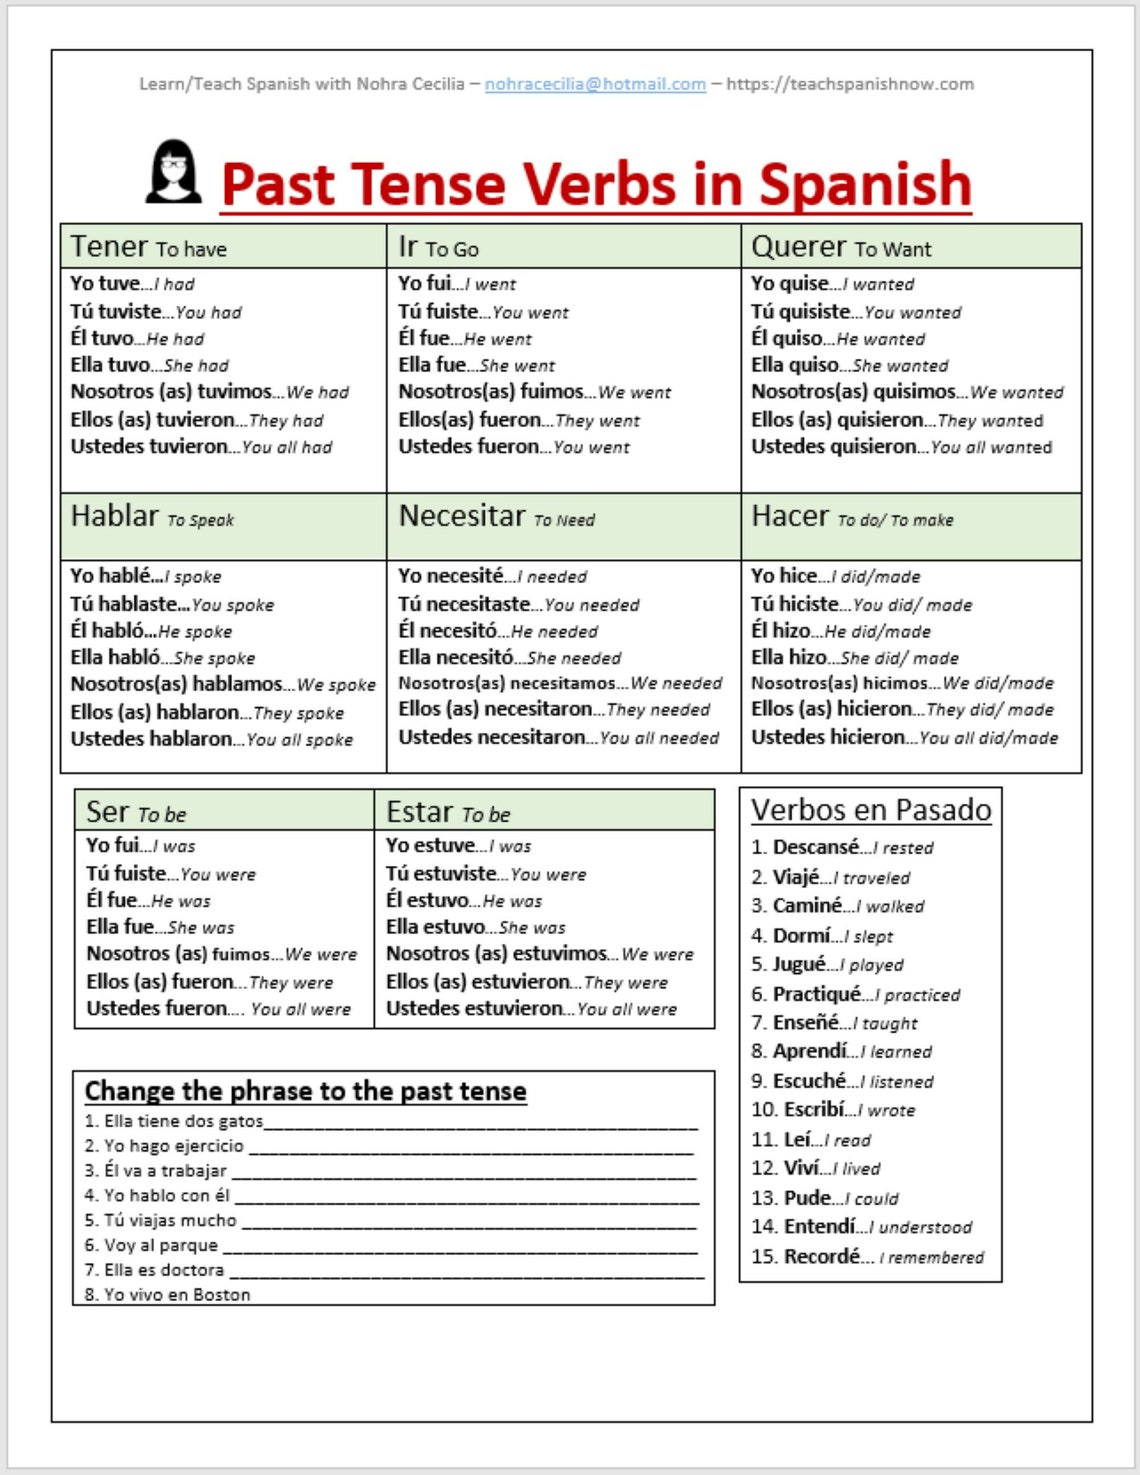 Past Tense Verbs in Spanish - Etsy